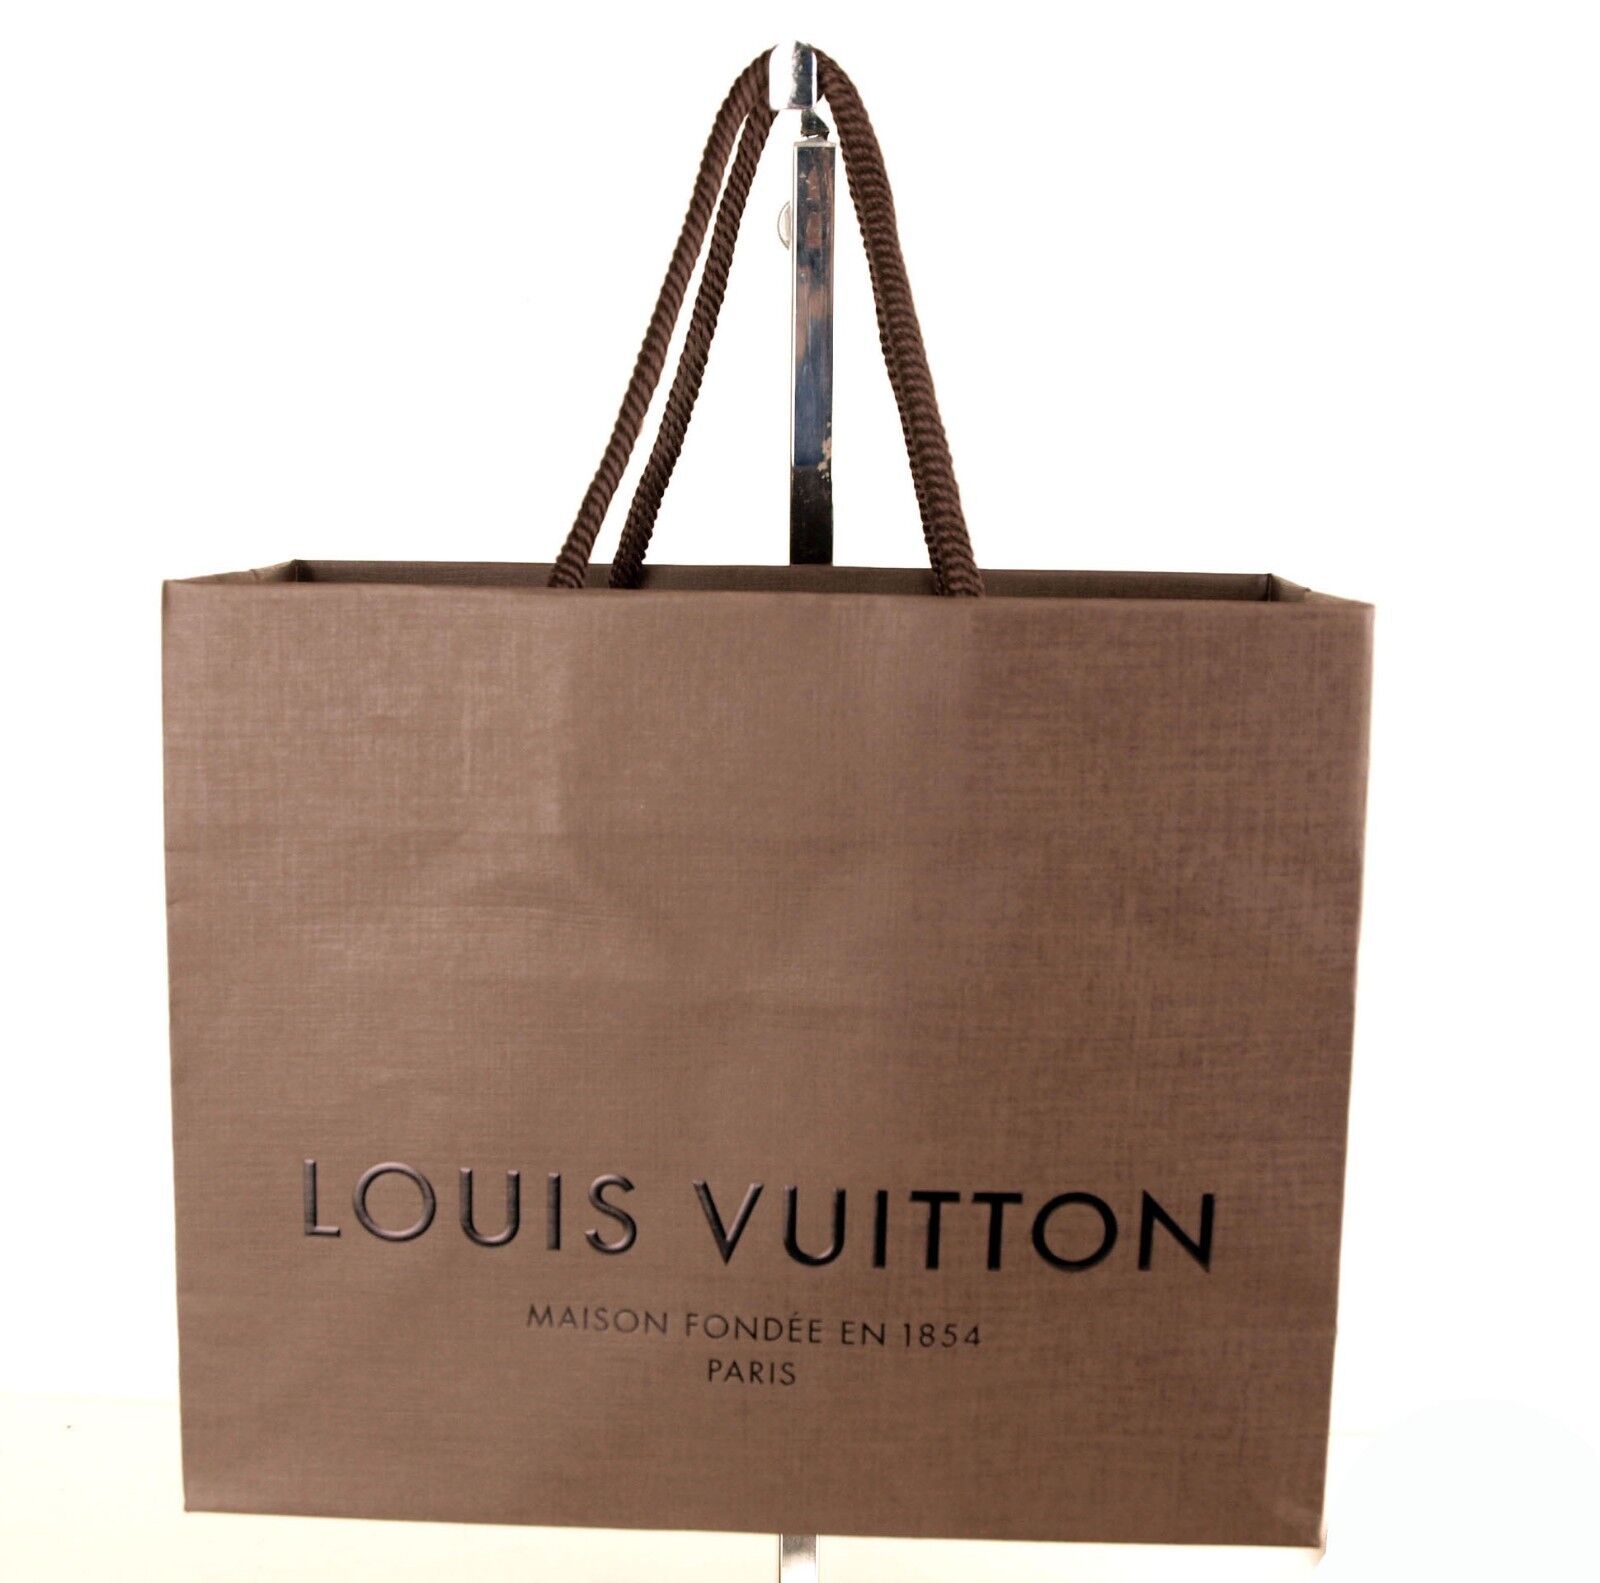 Louis Vuitton Bag Store Shop Window Editorial Photography  Image of  luxury handbags 59719597